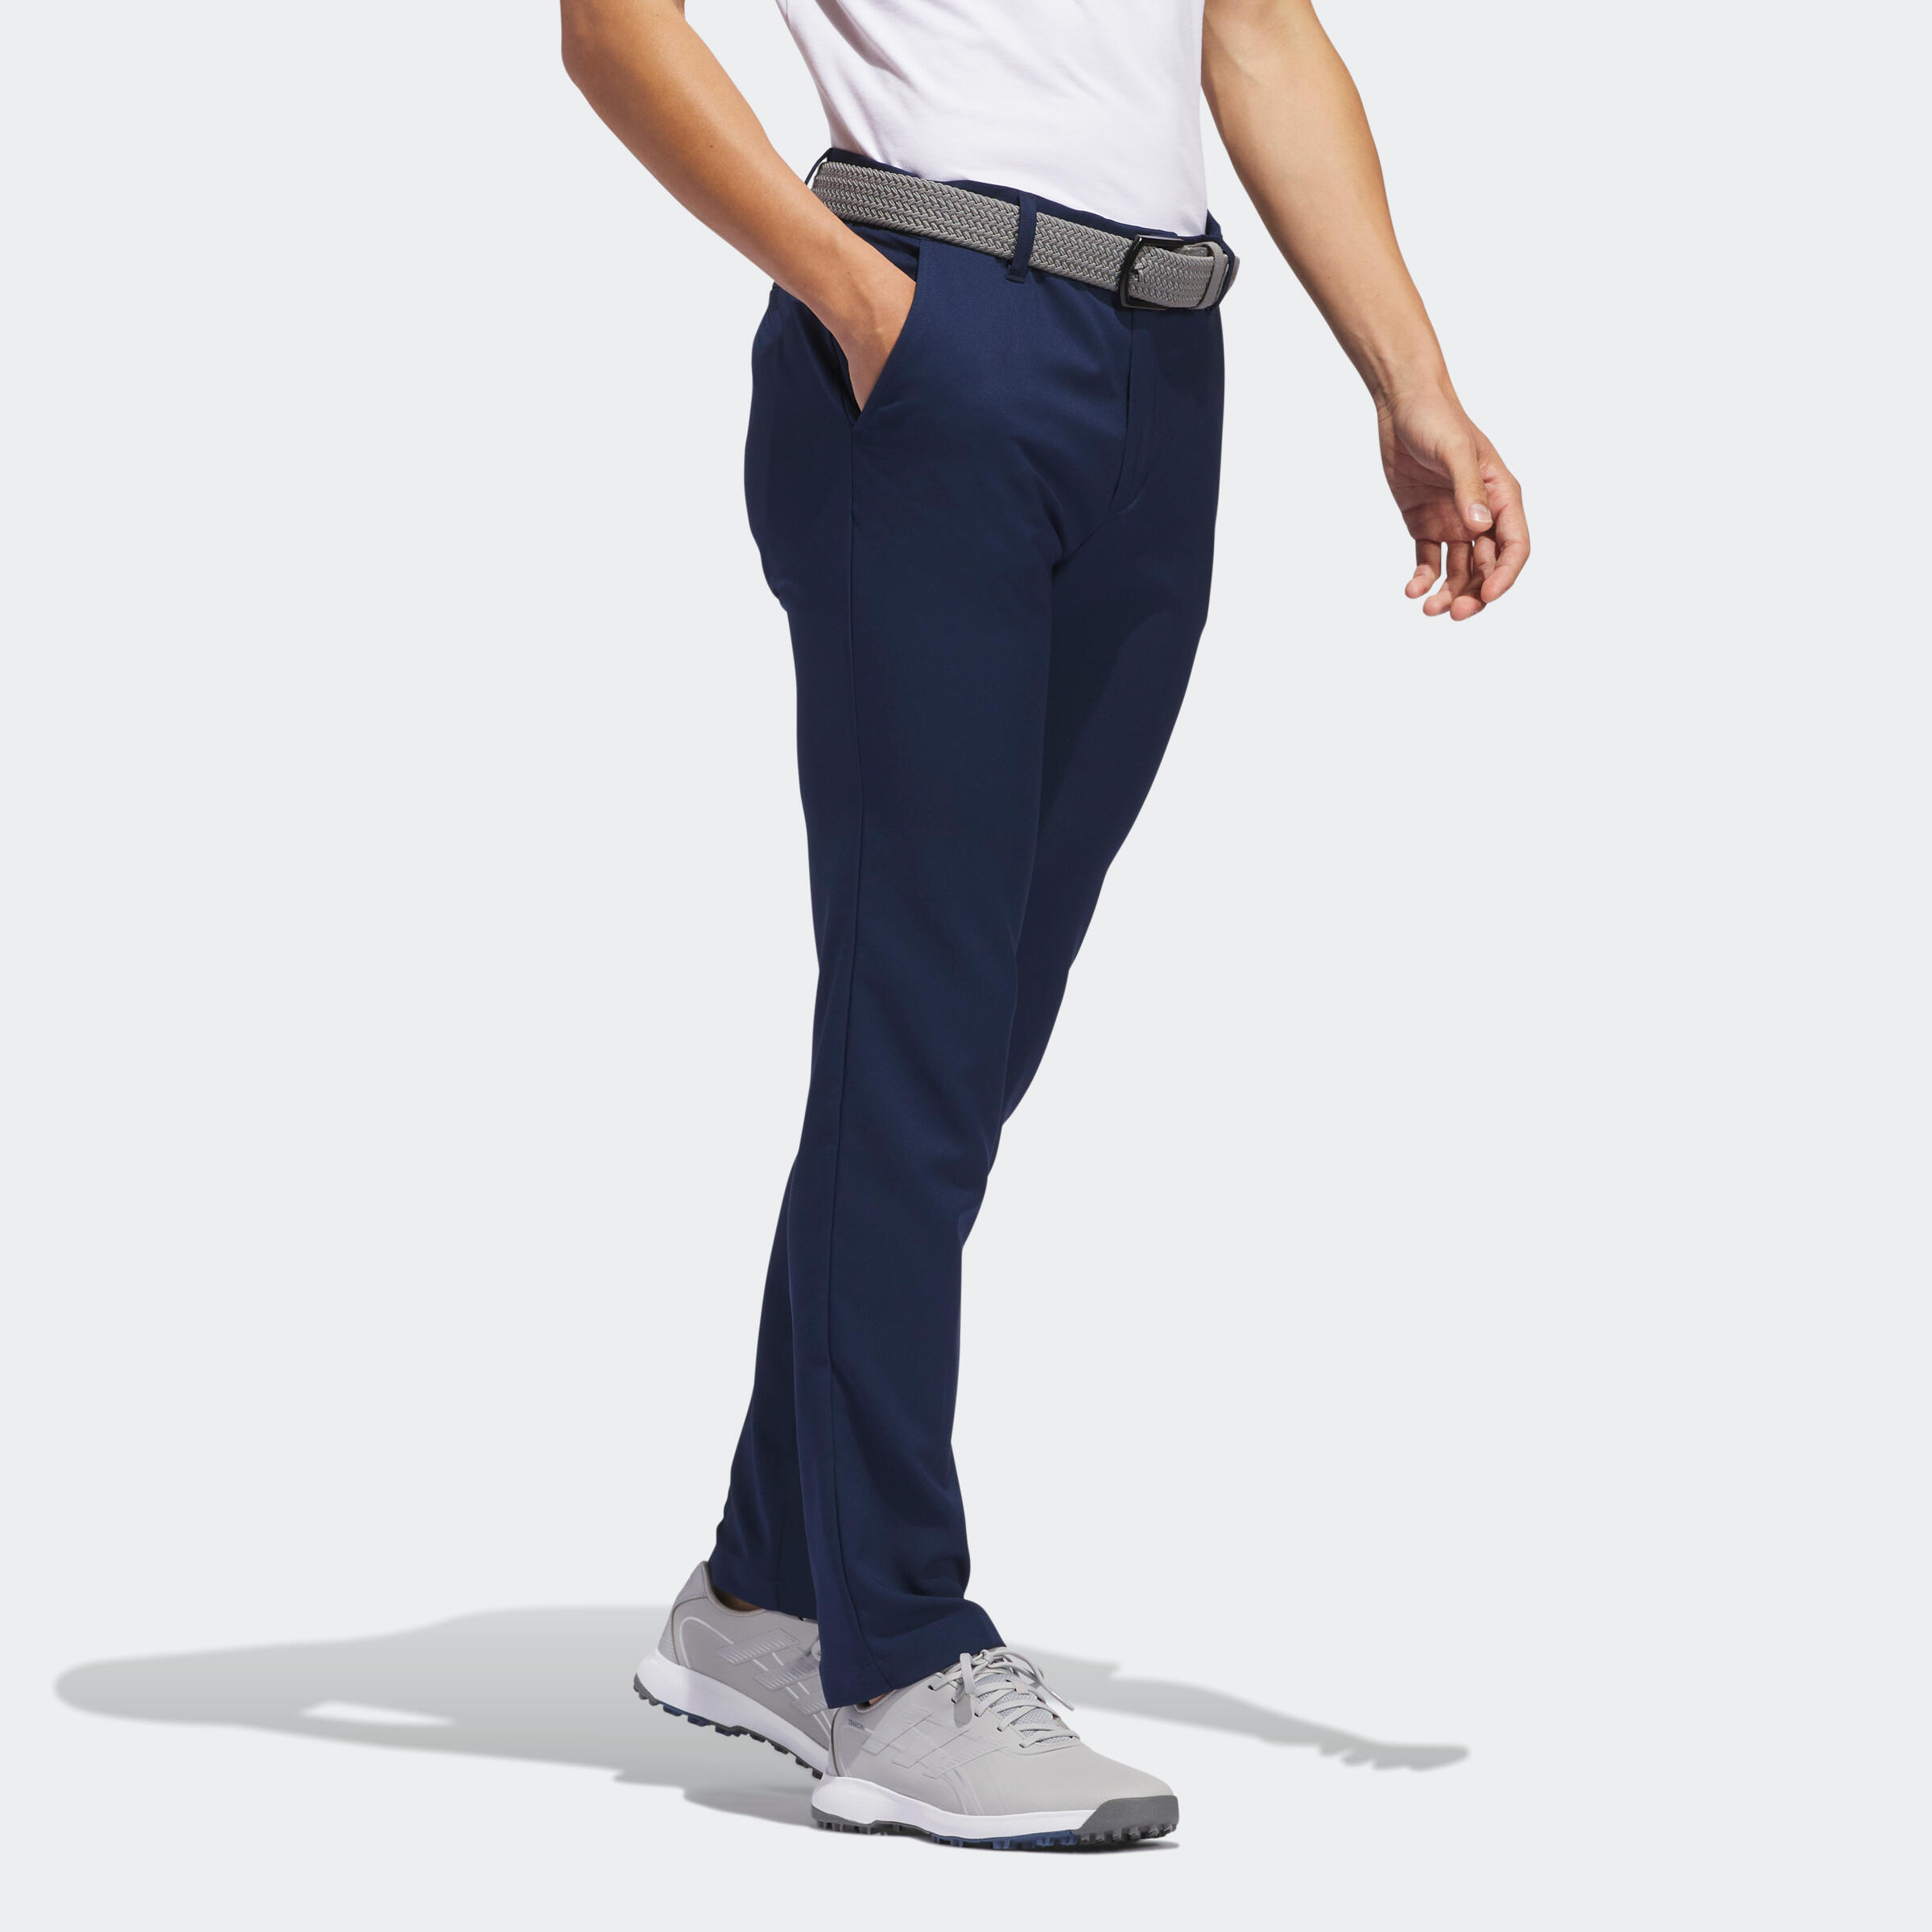 ADIDAS Men's golf trousers - Adidas navy blue